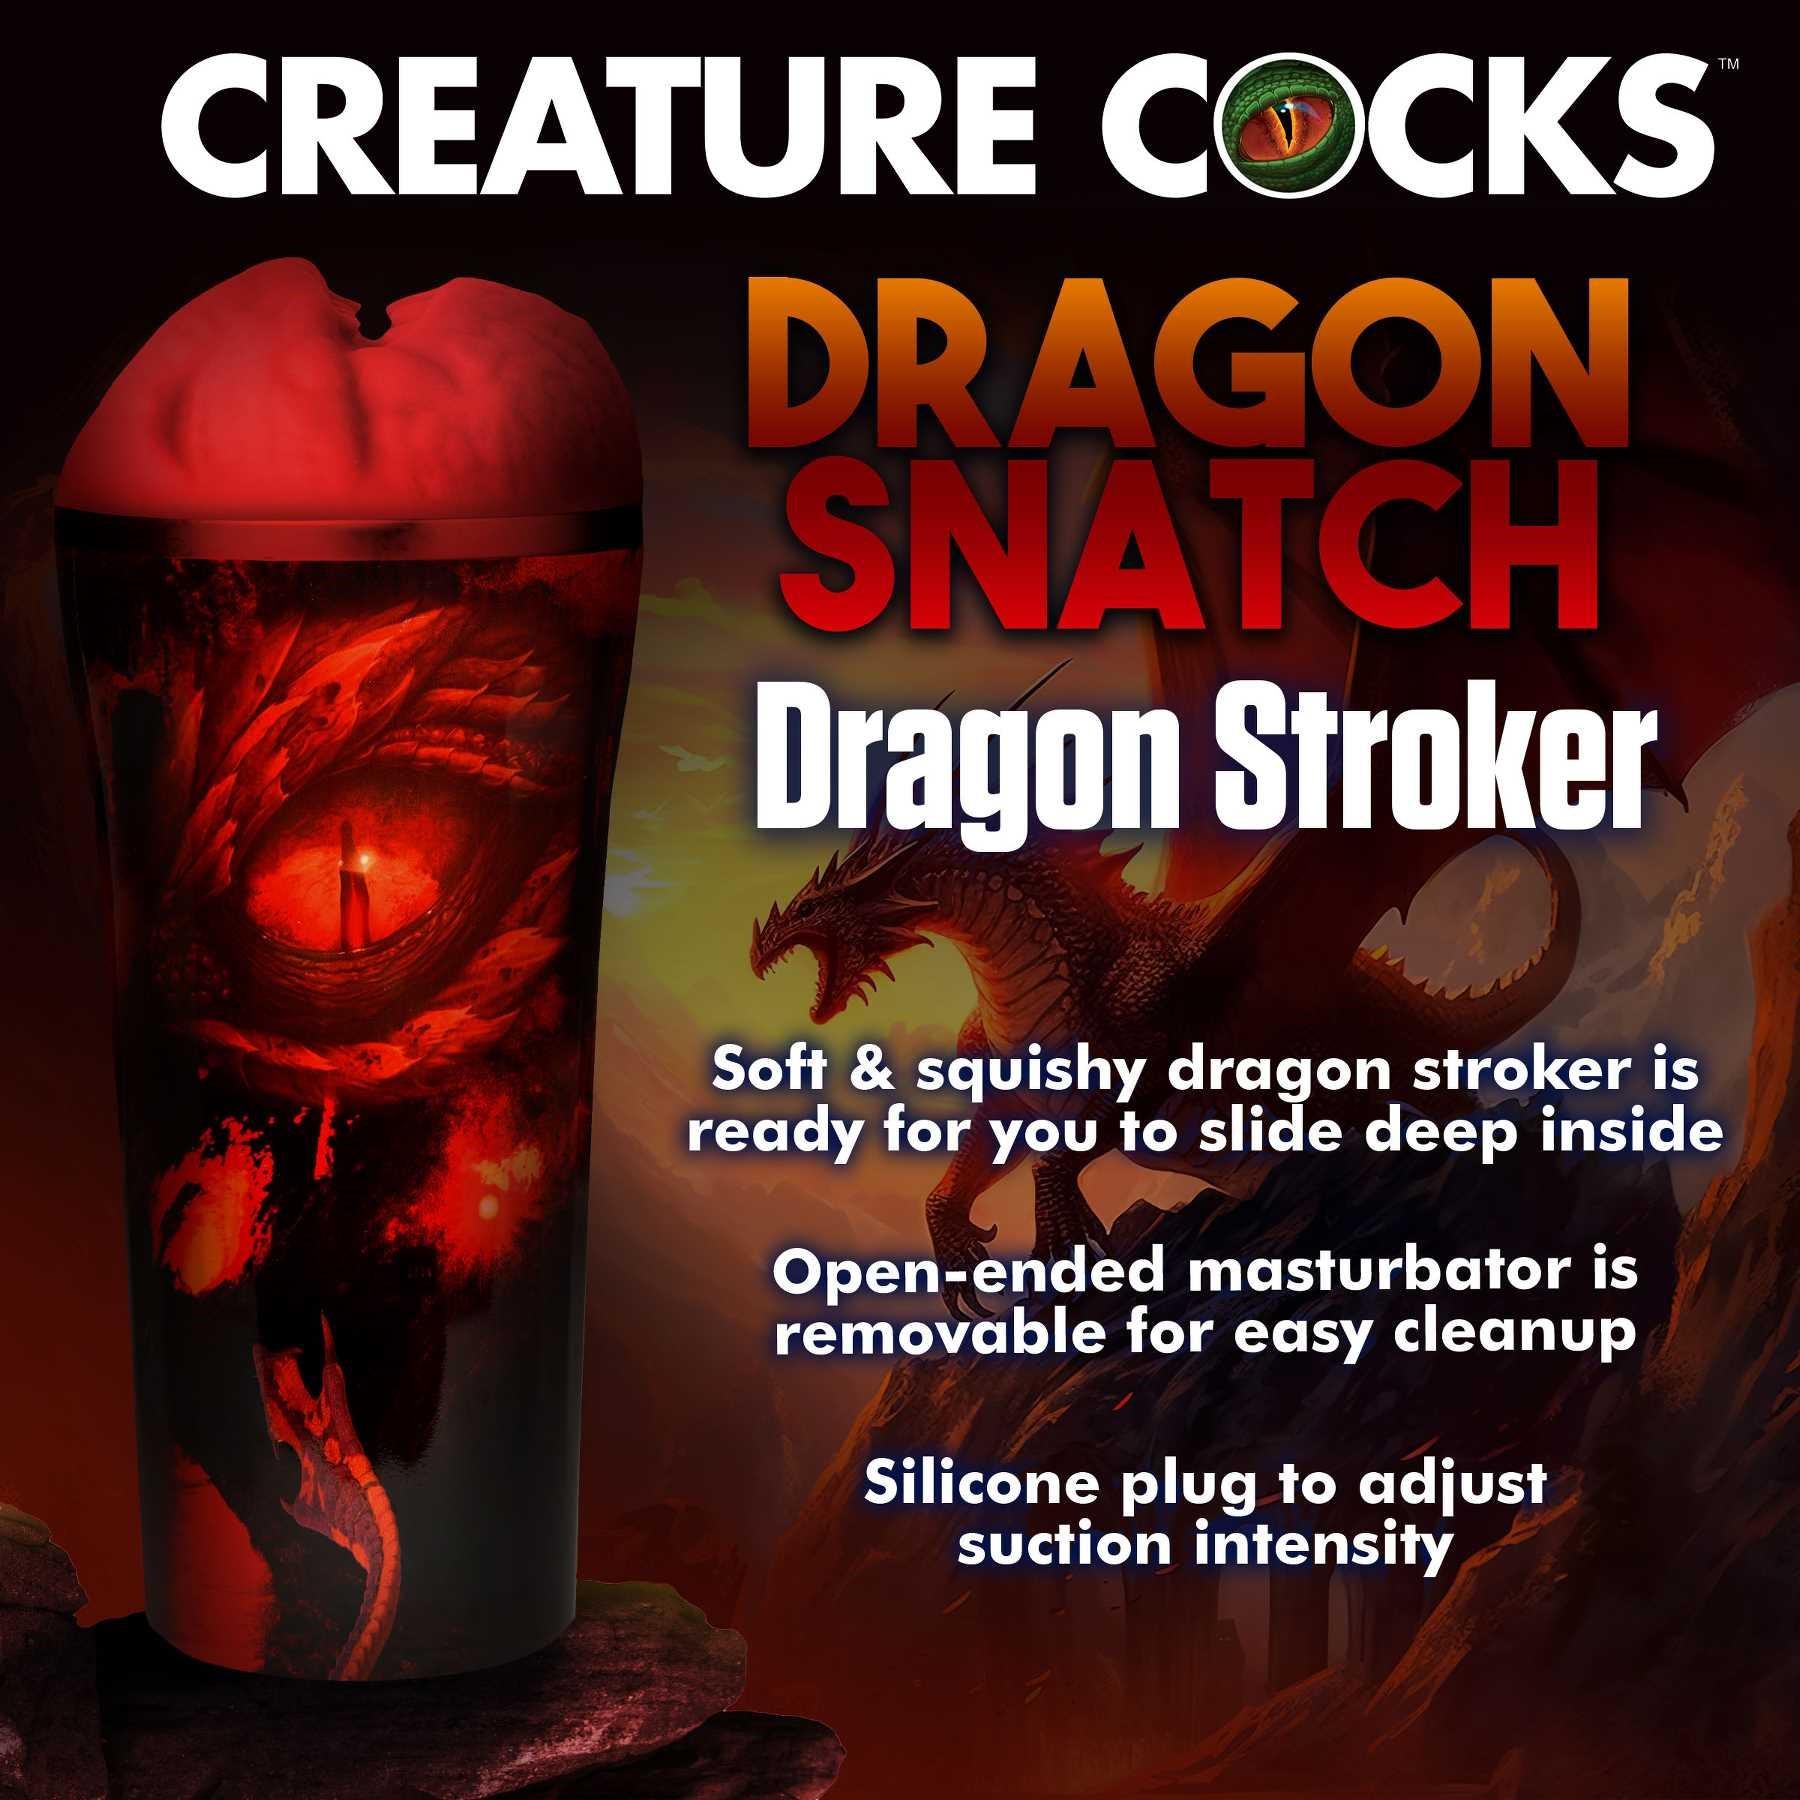 Creature Cocks Dragon Snatch Dragon Stroker mood image #3